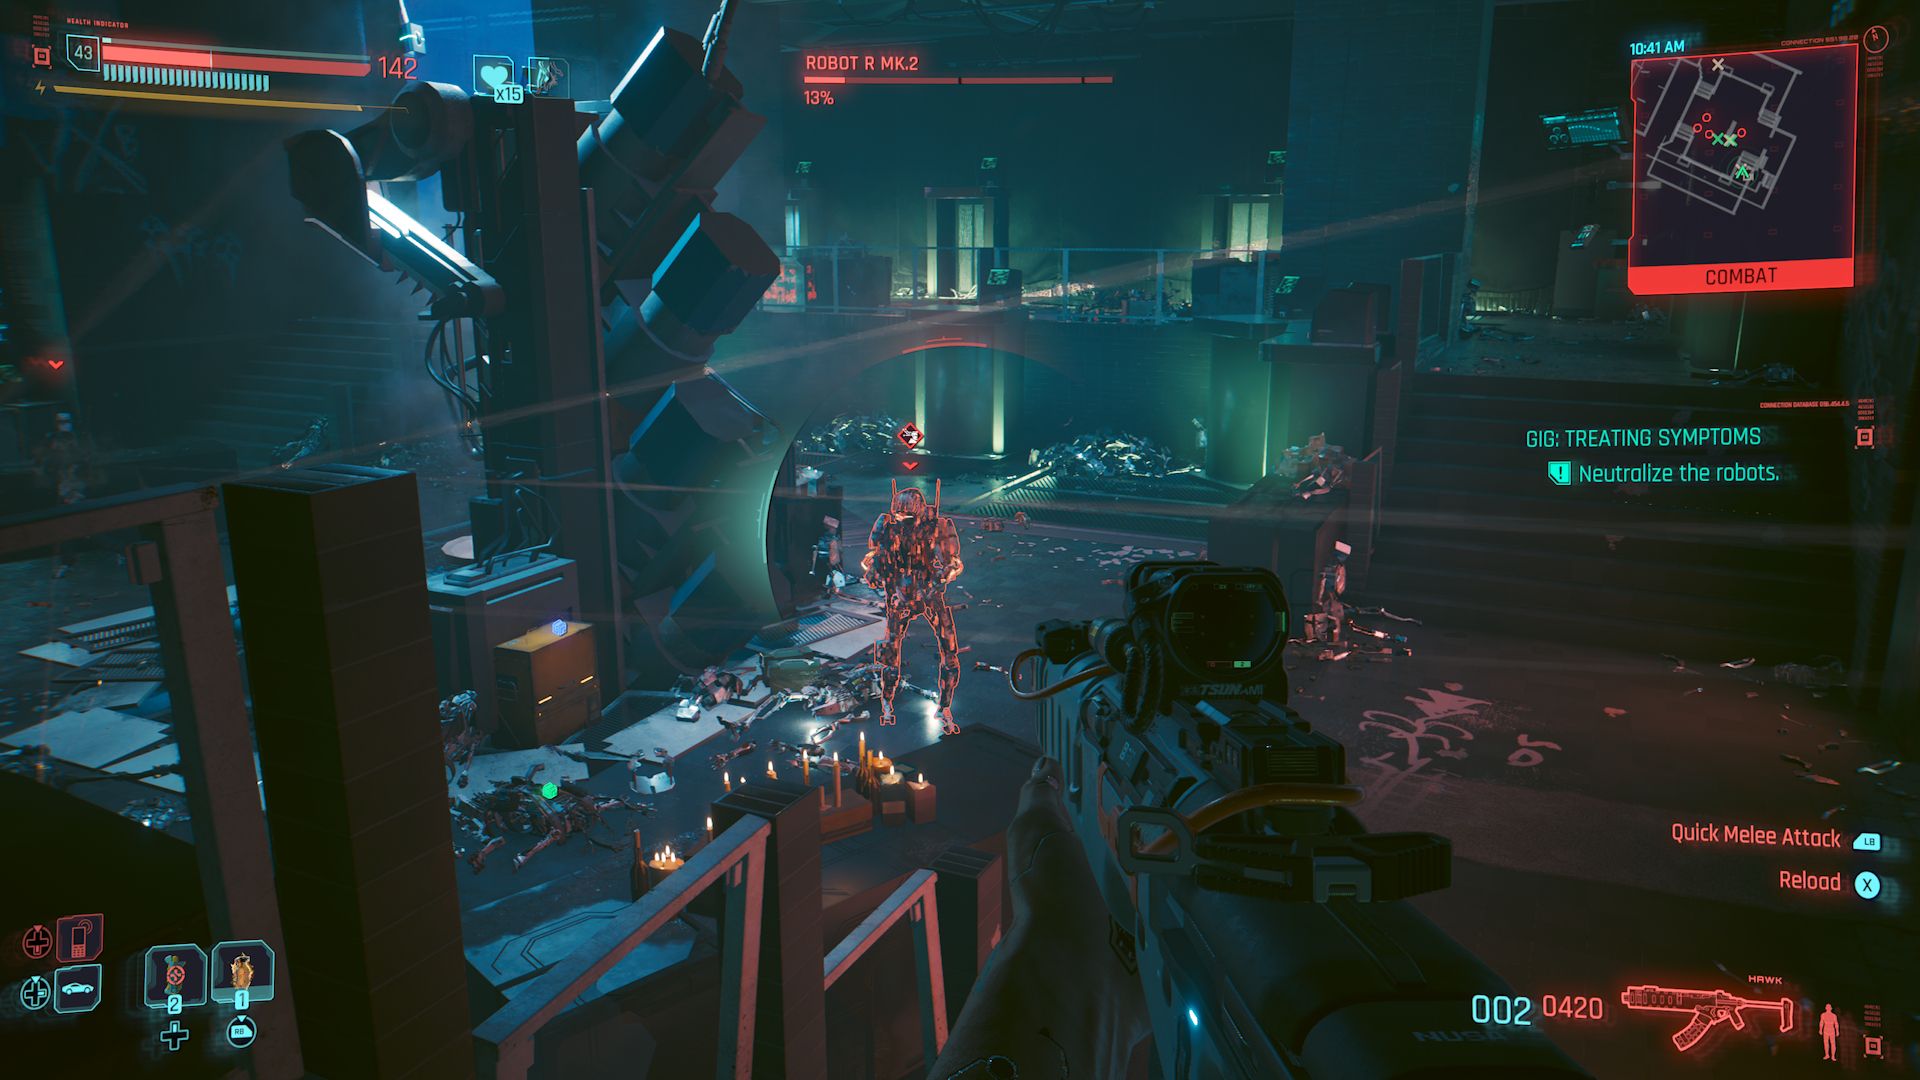 Cyberpunk 2077 Phantom Liberty Screenshot Of Player Fighting Robot R MK.2